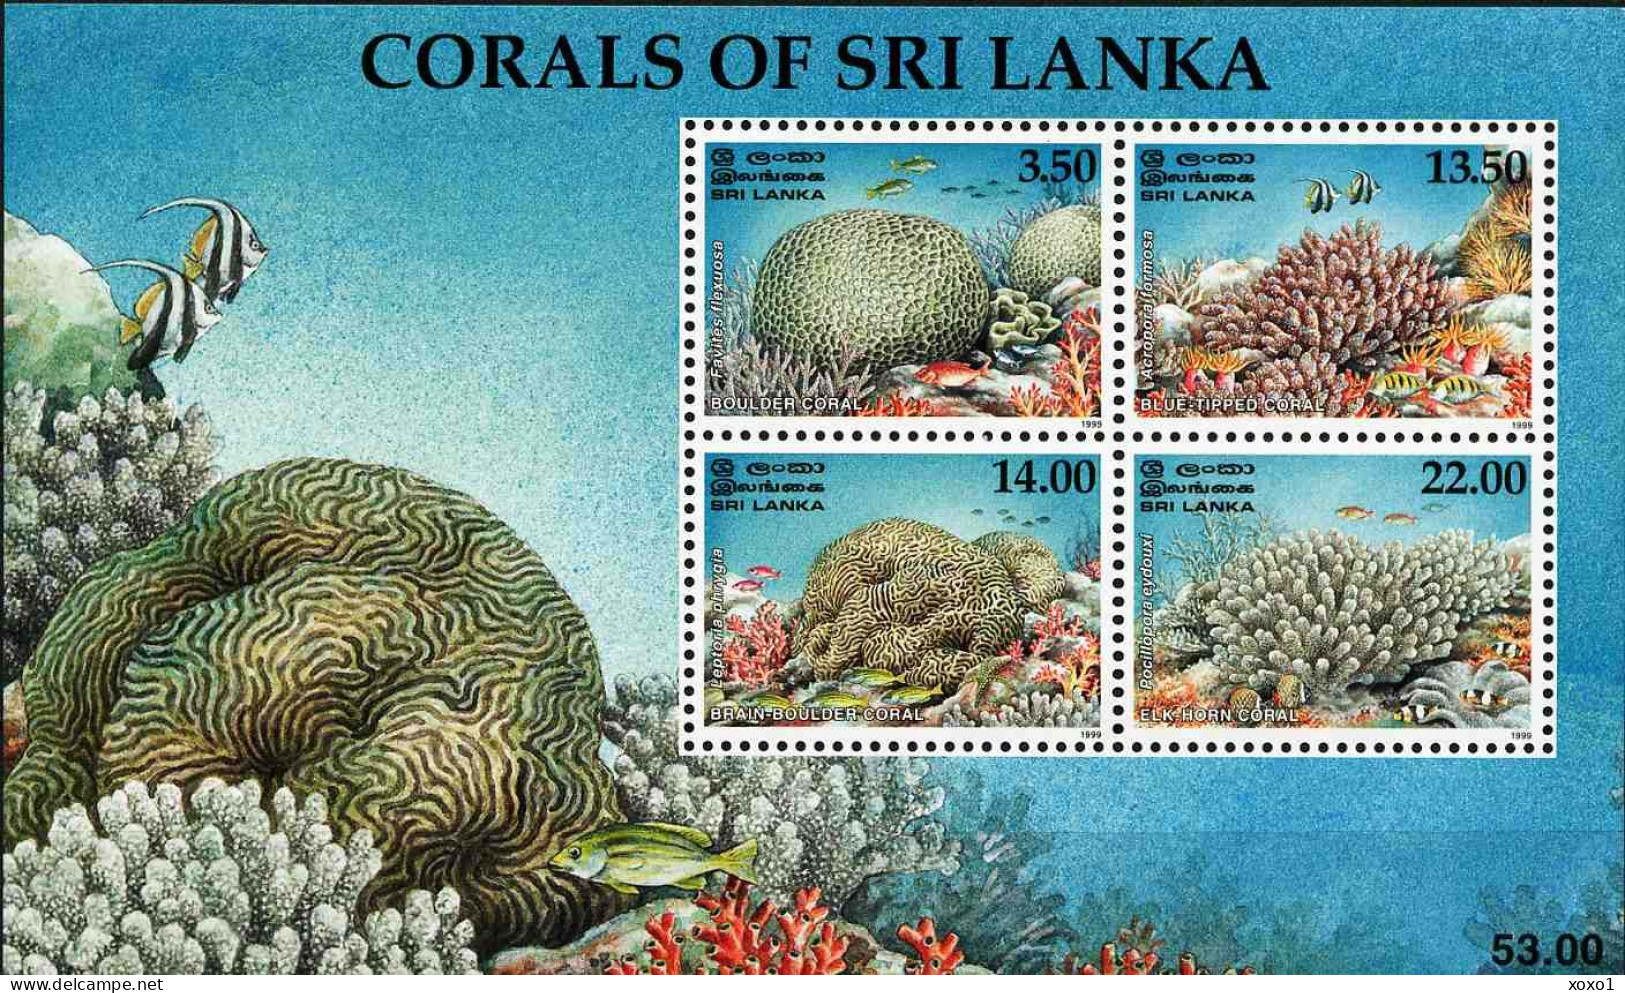 Sri Lanka 2000 MiNr. (Block 80) Marine Life, Corals S\sh MNH ** 5.50 € - Sri Lanka (Ceylan) (1948-...)